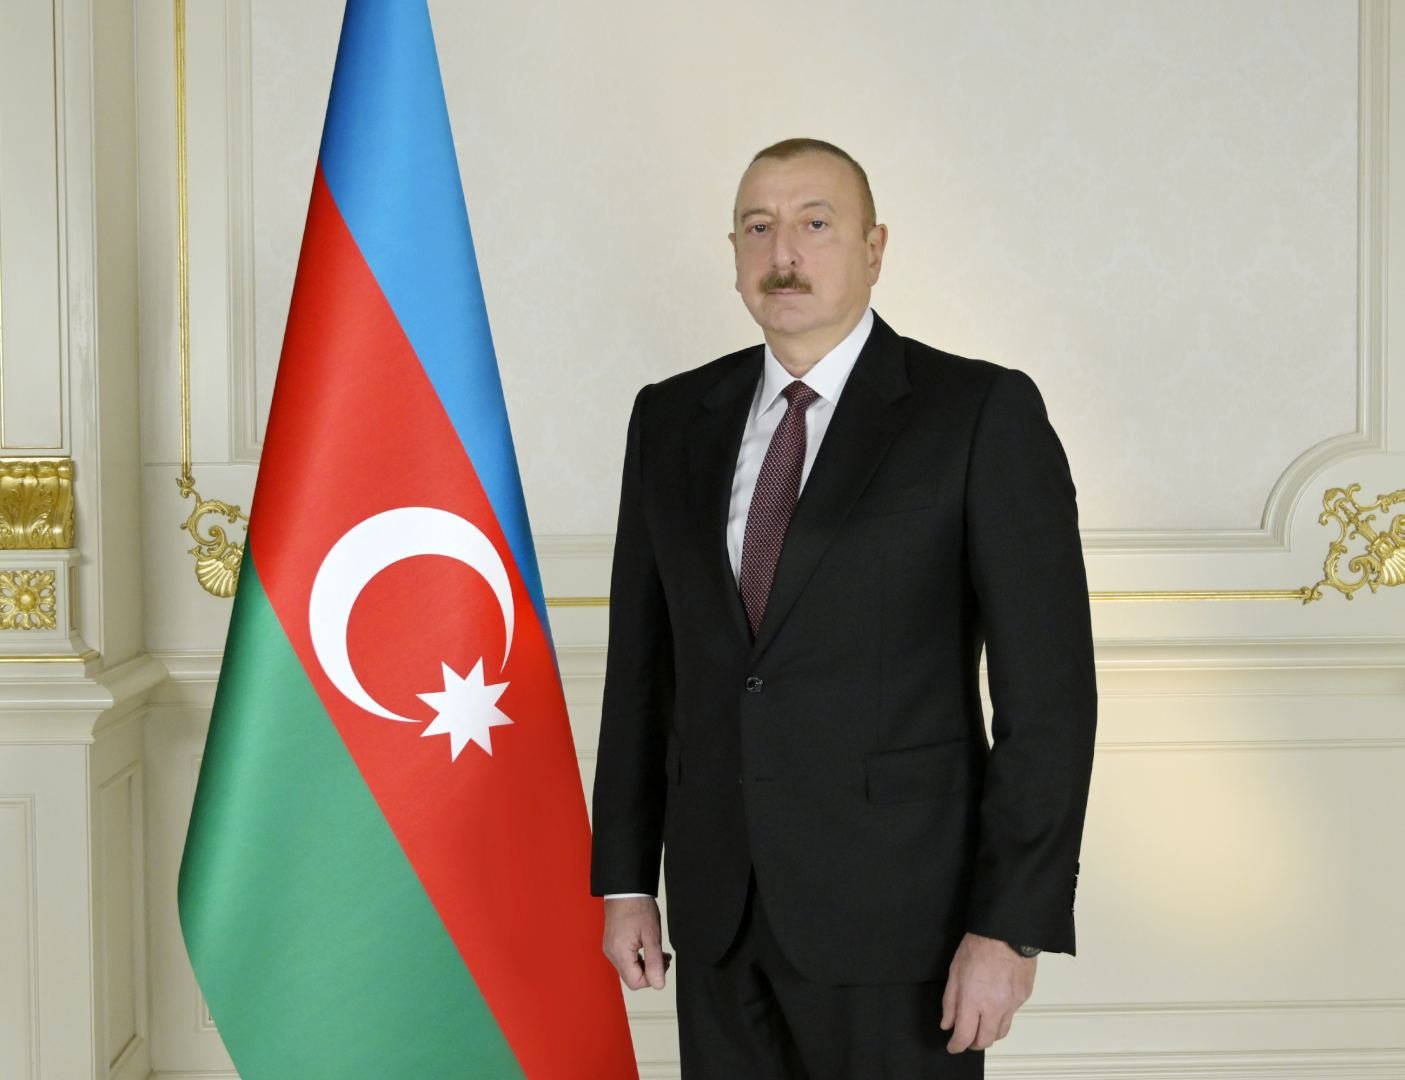 President Ilham Aliyev concludes his working visit to Türkiye